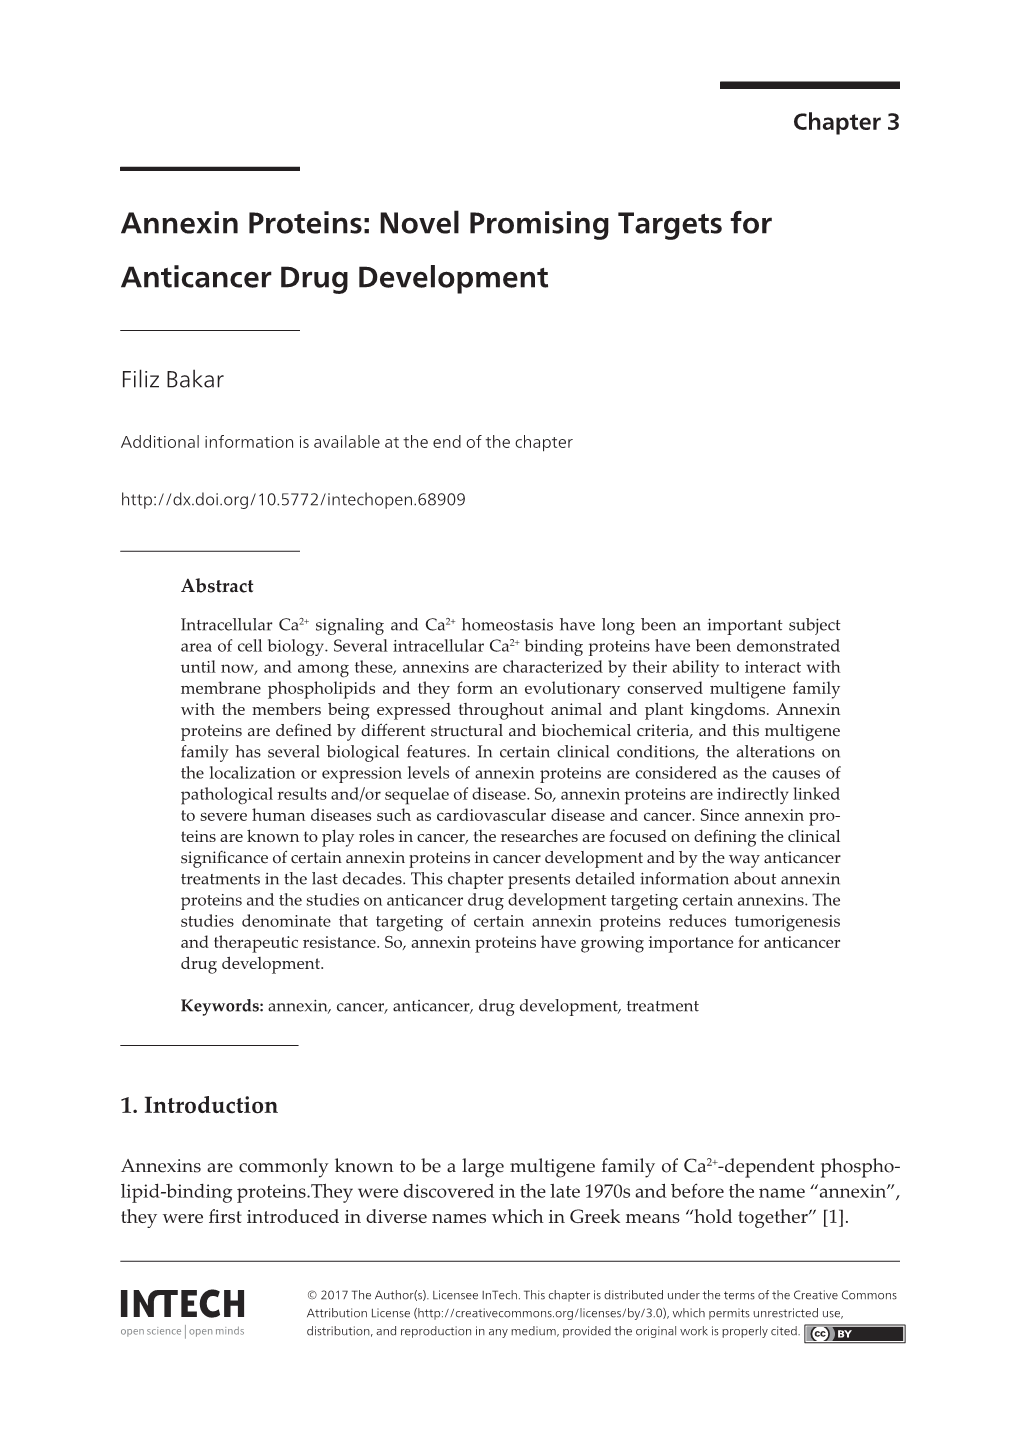 Annexin Proteins: Novel Promising Targets for Anticancer Drug Development